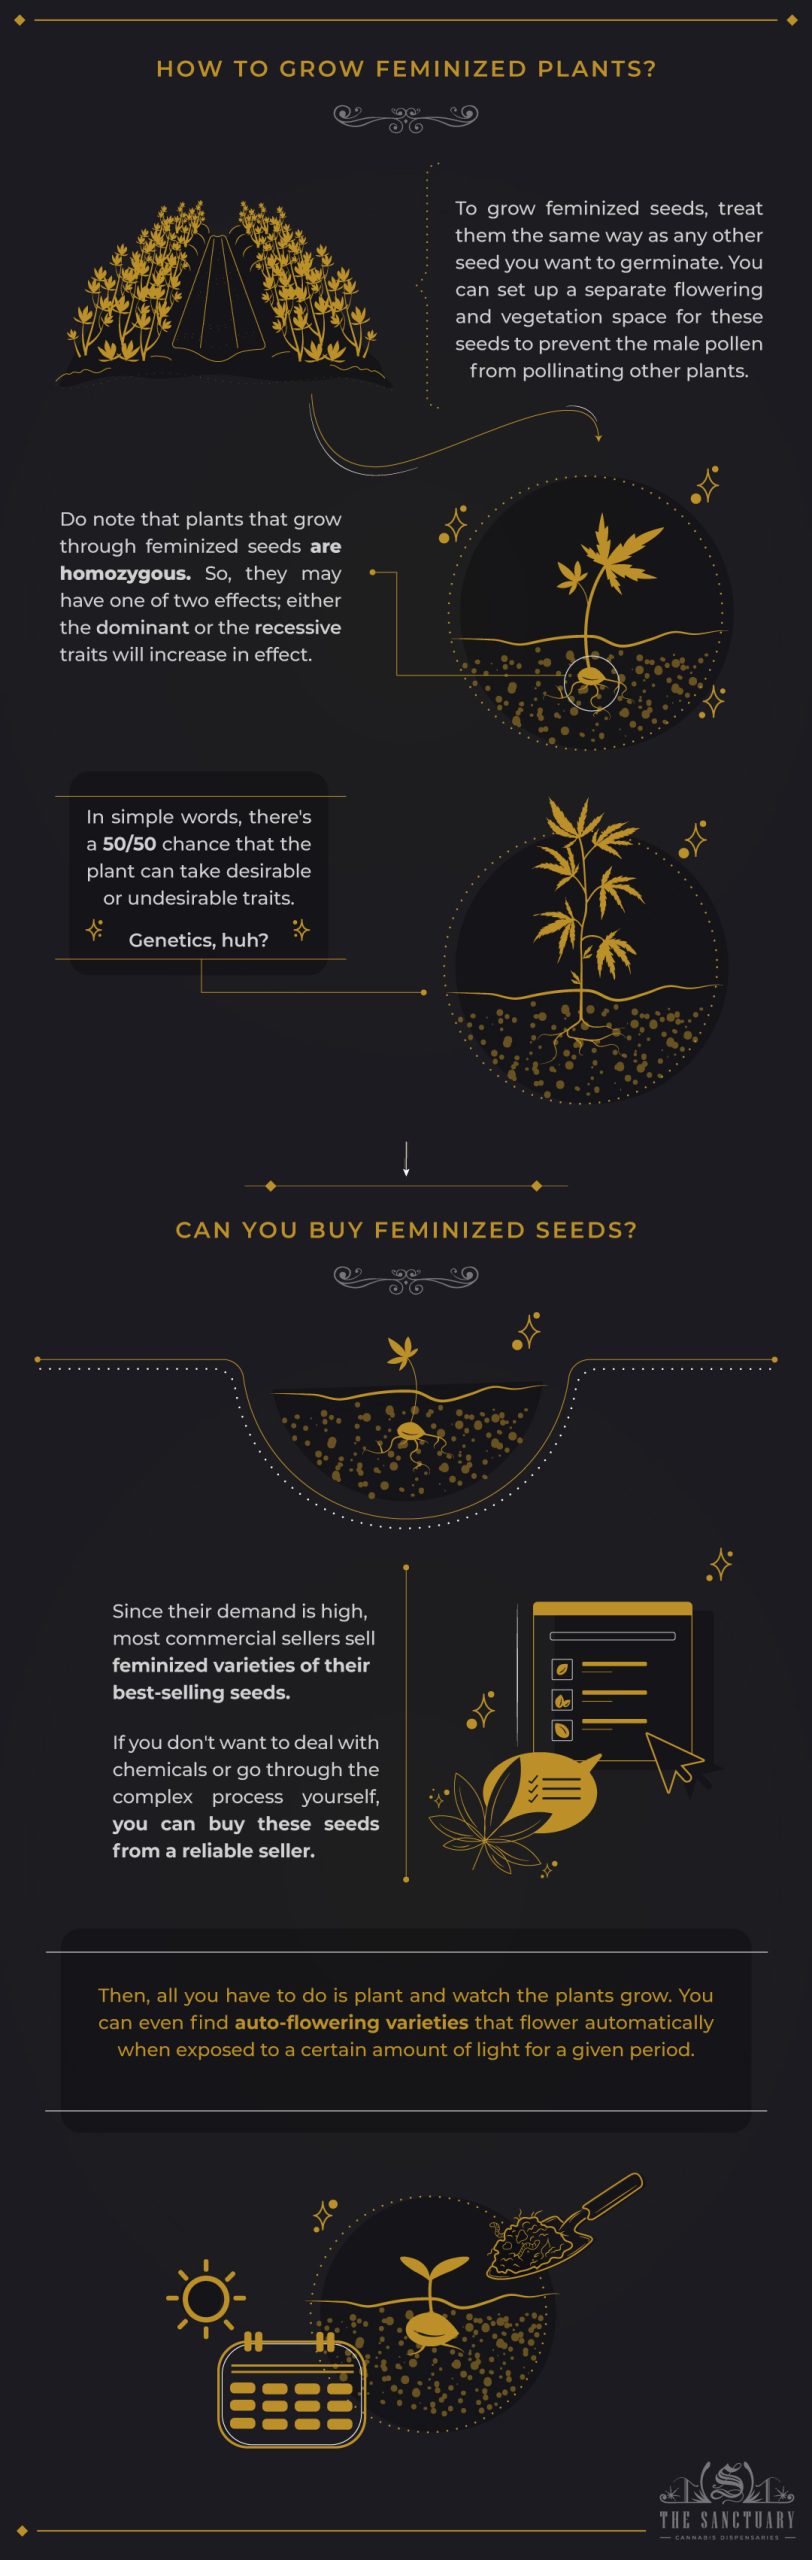 How to Grow Feminized Plants